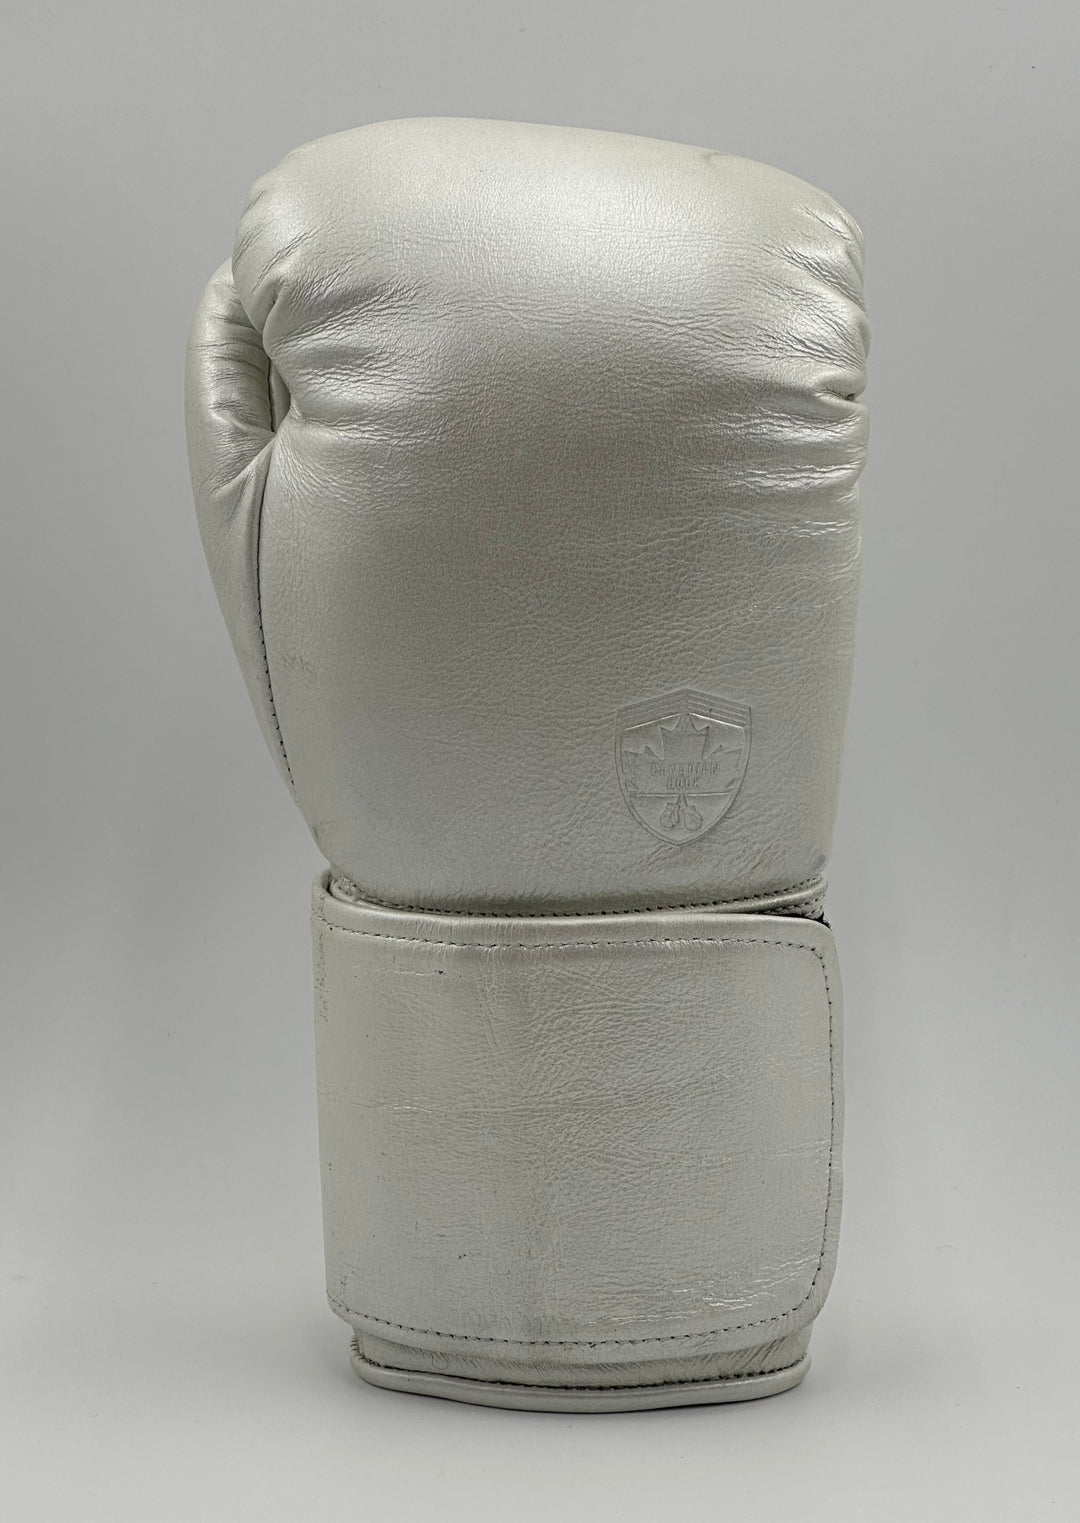 G12000 Boxing Gloves - PEARL WHITE